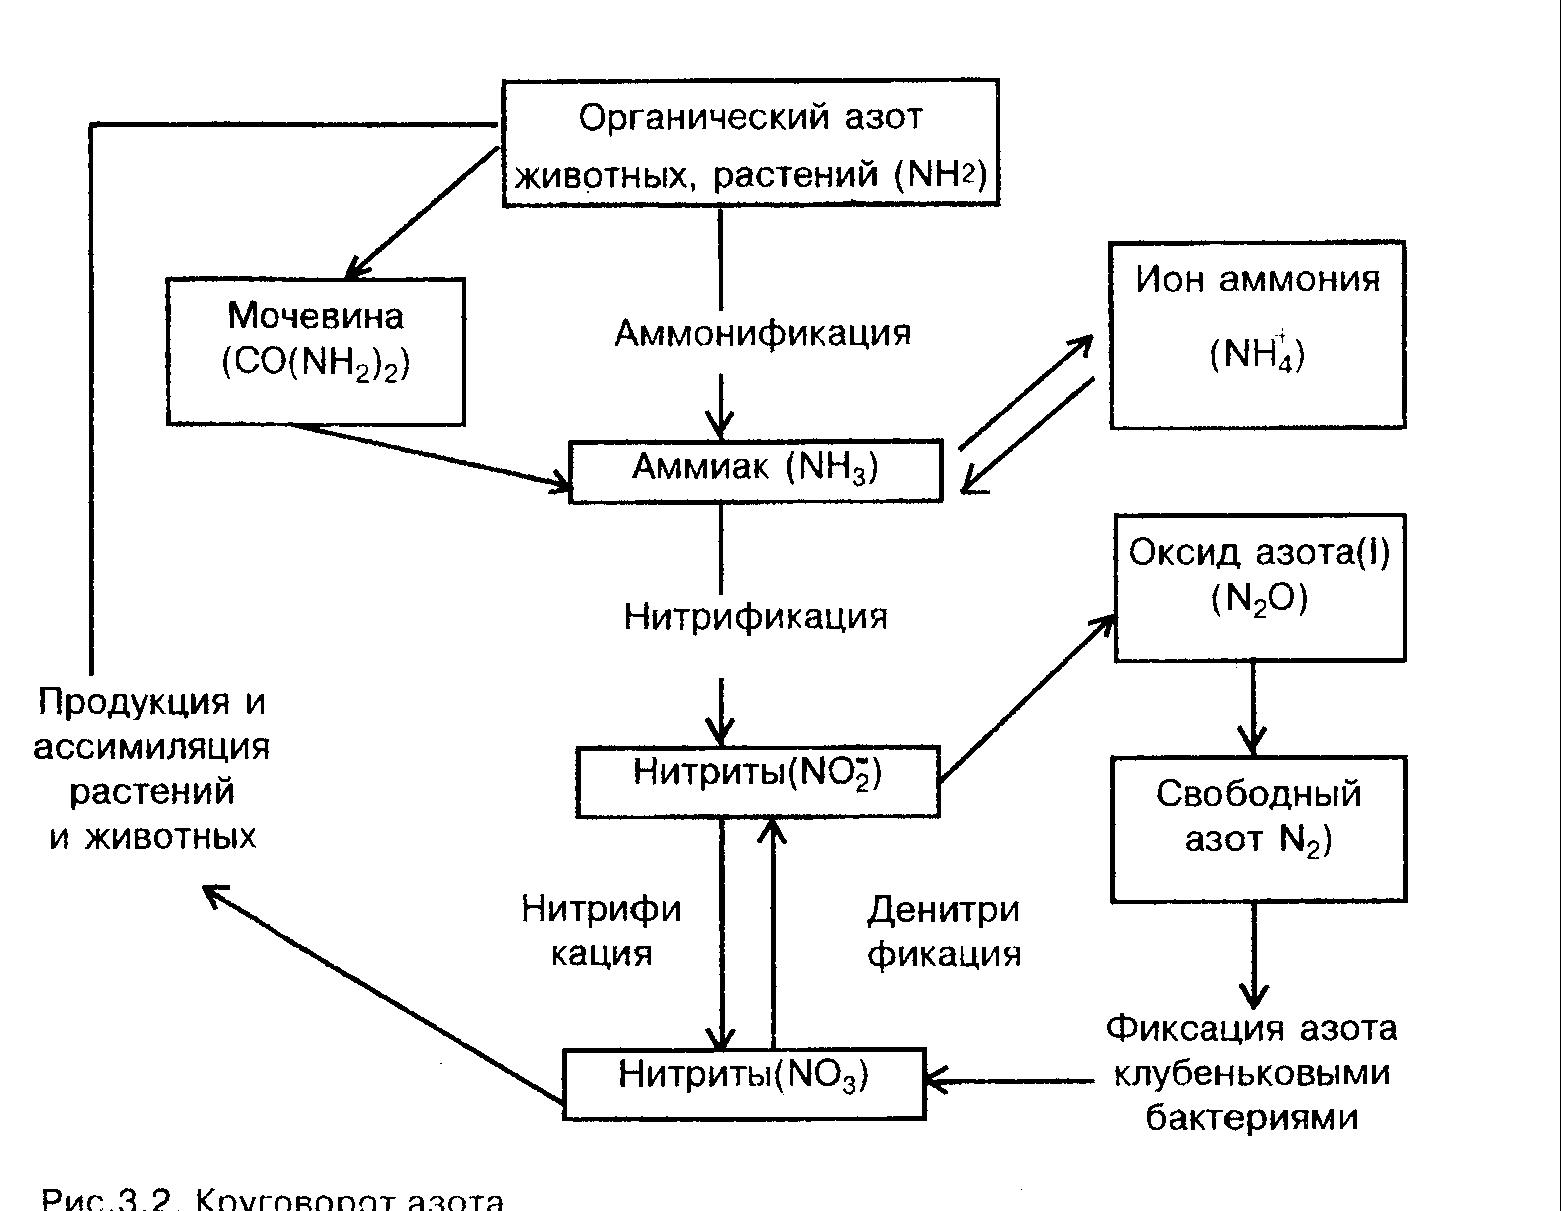 Аммонификация. Круговорот азота (по ф.Рамаду, 1981). Классификация бактерий фиксирующих атмосферный азот схема. Аммонификация в круговороте азота. Классификация бактерий фиксирующих атмосферный азот.